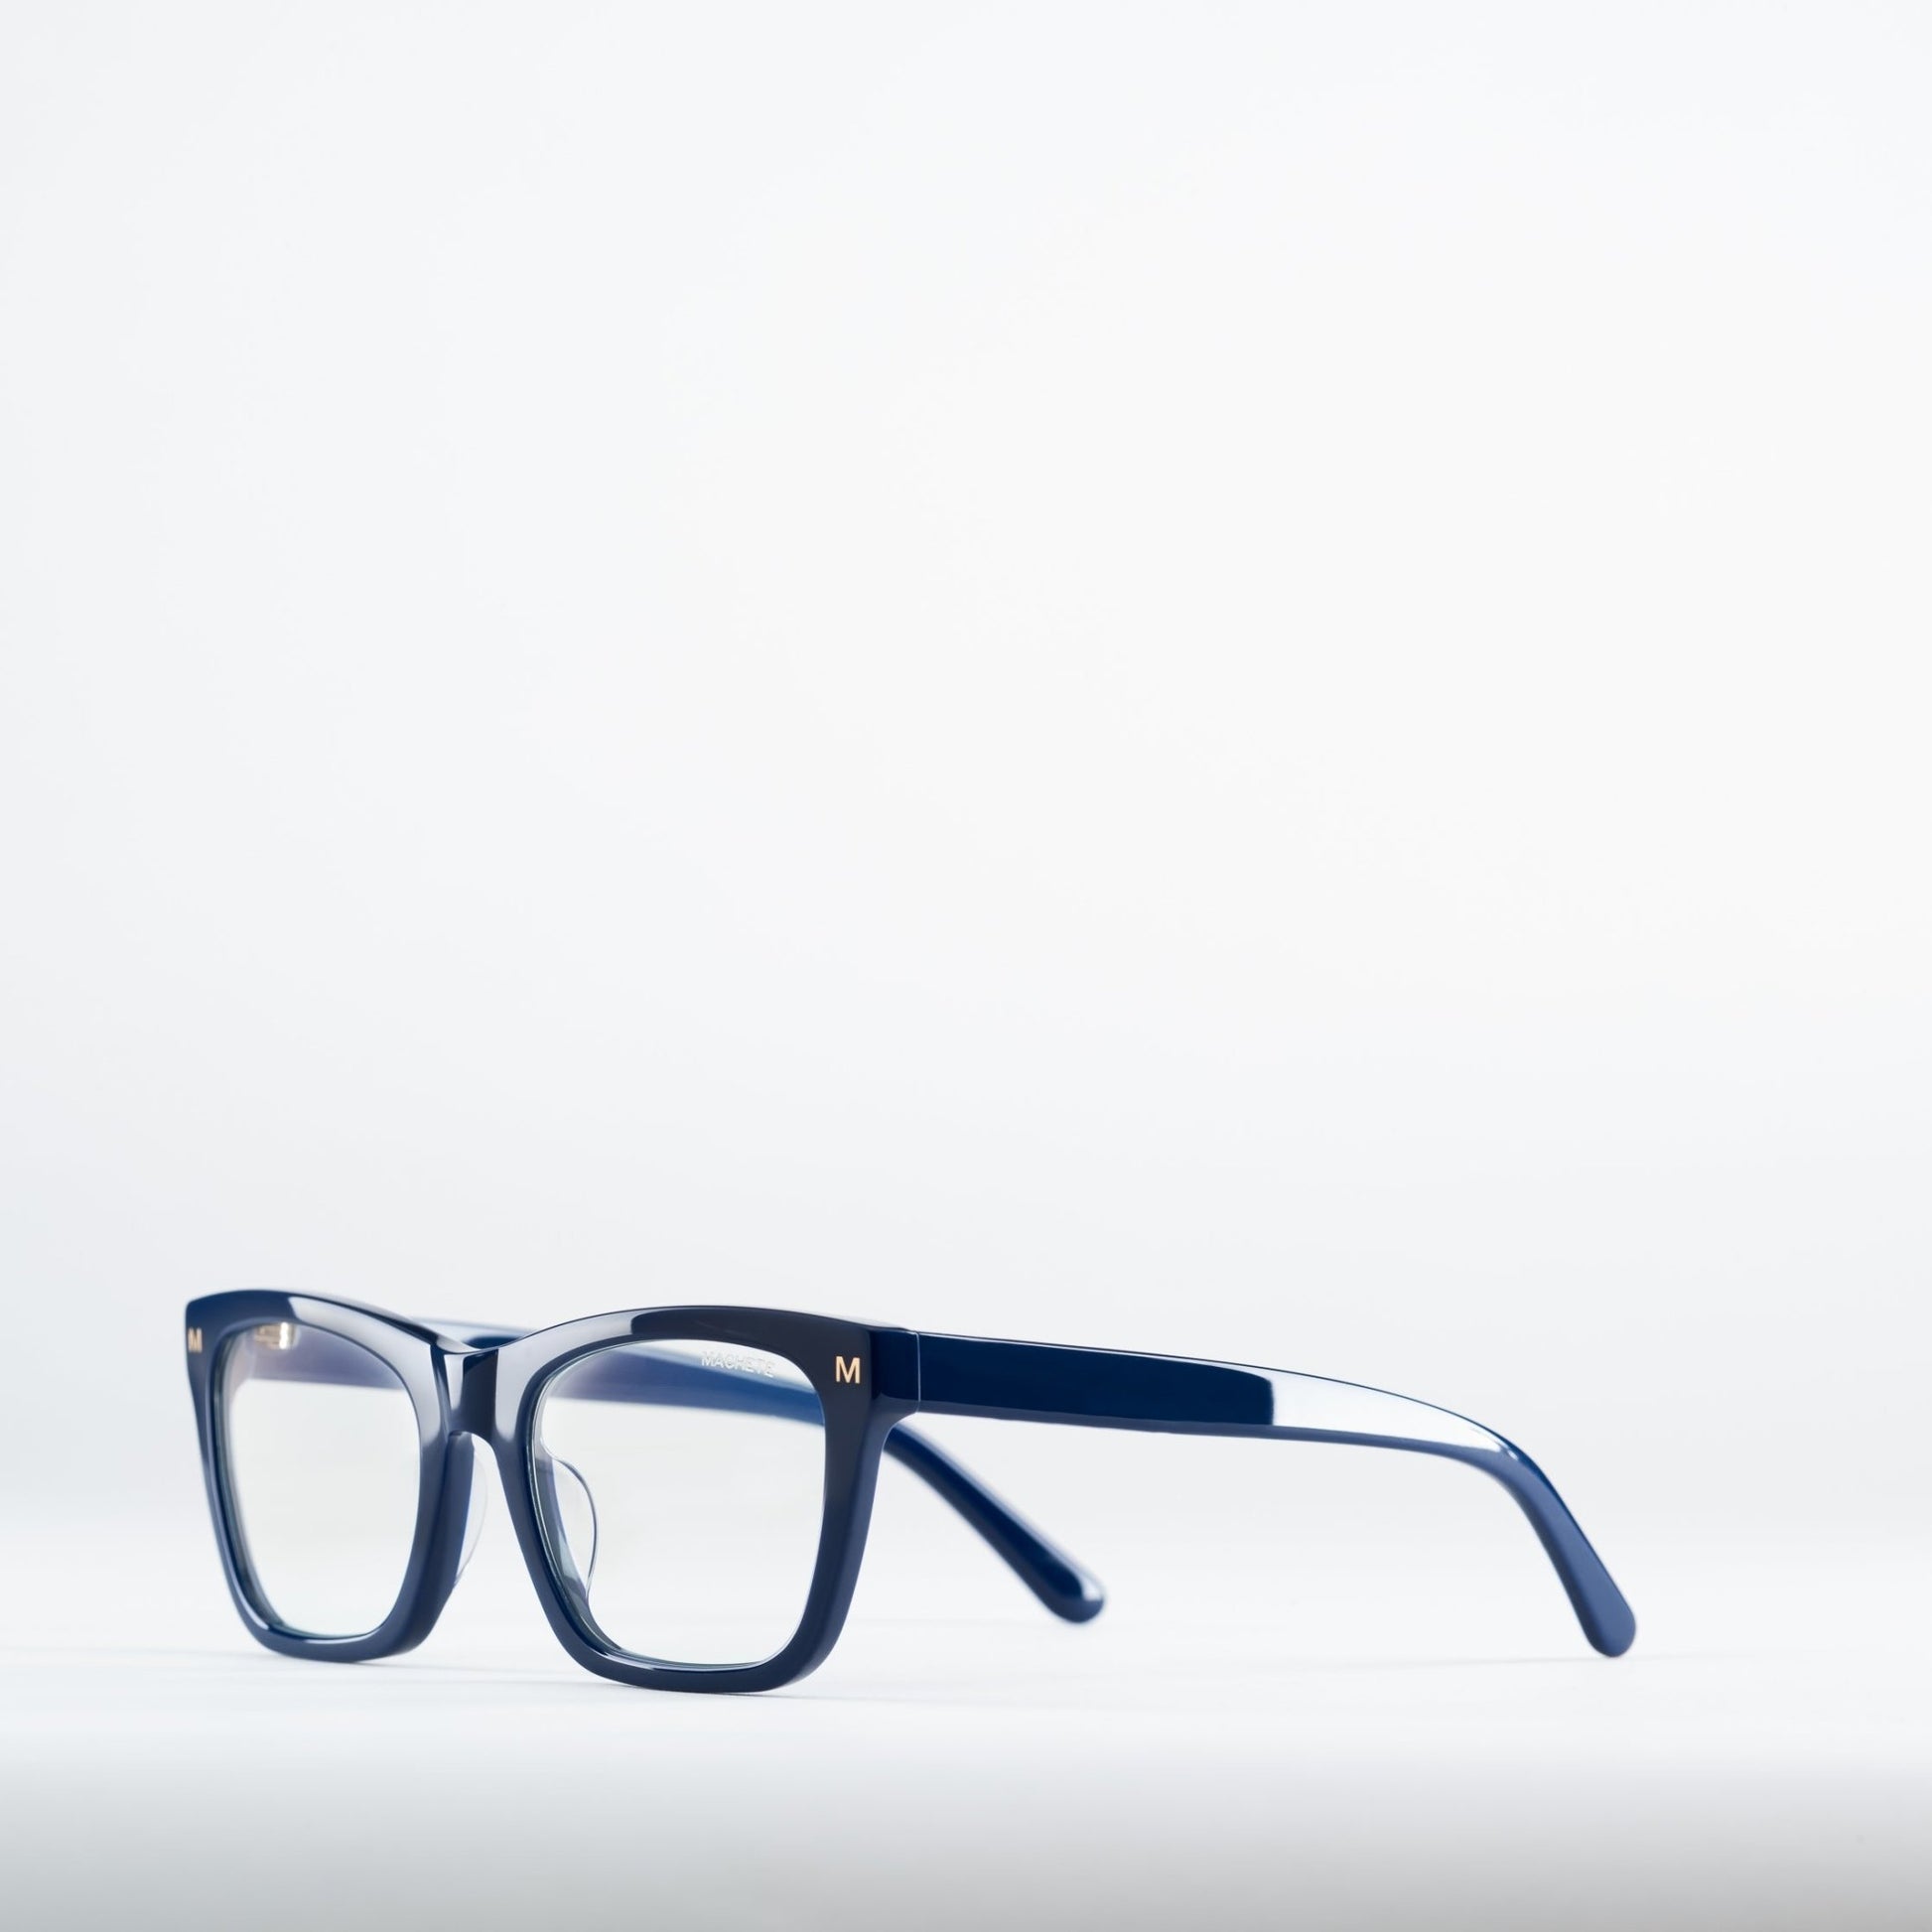 MACHETE Glasses in Parisian Blue